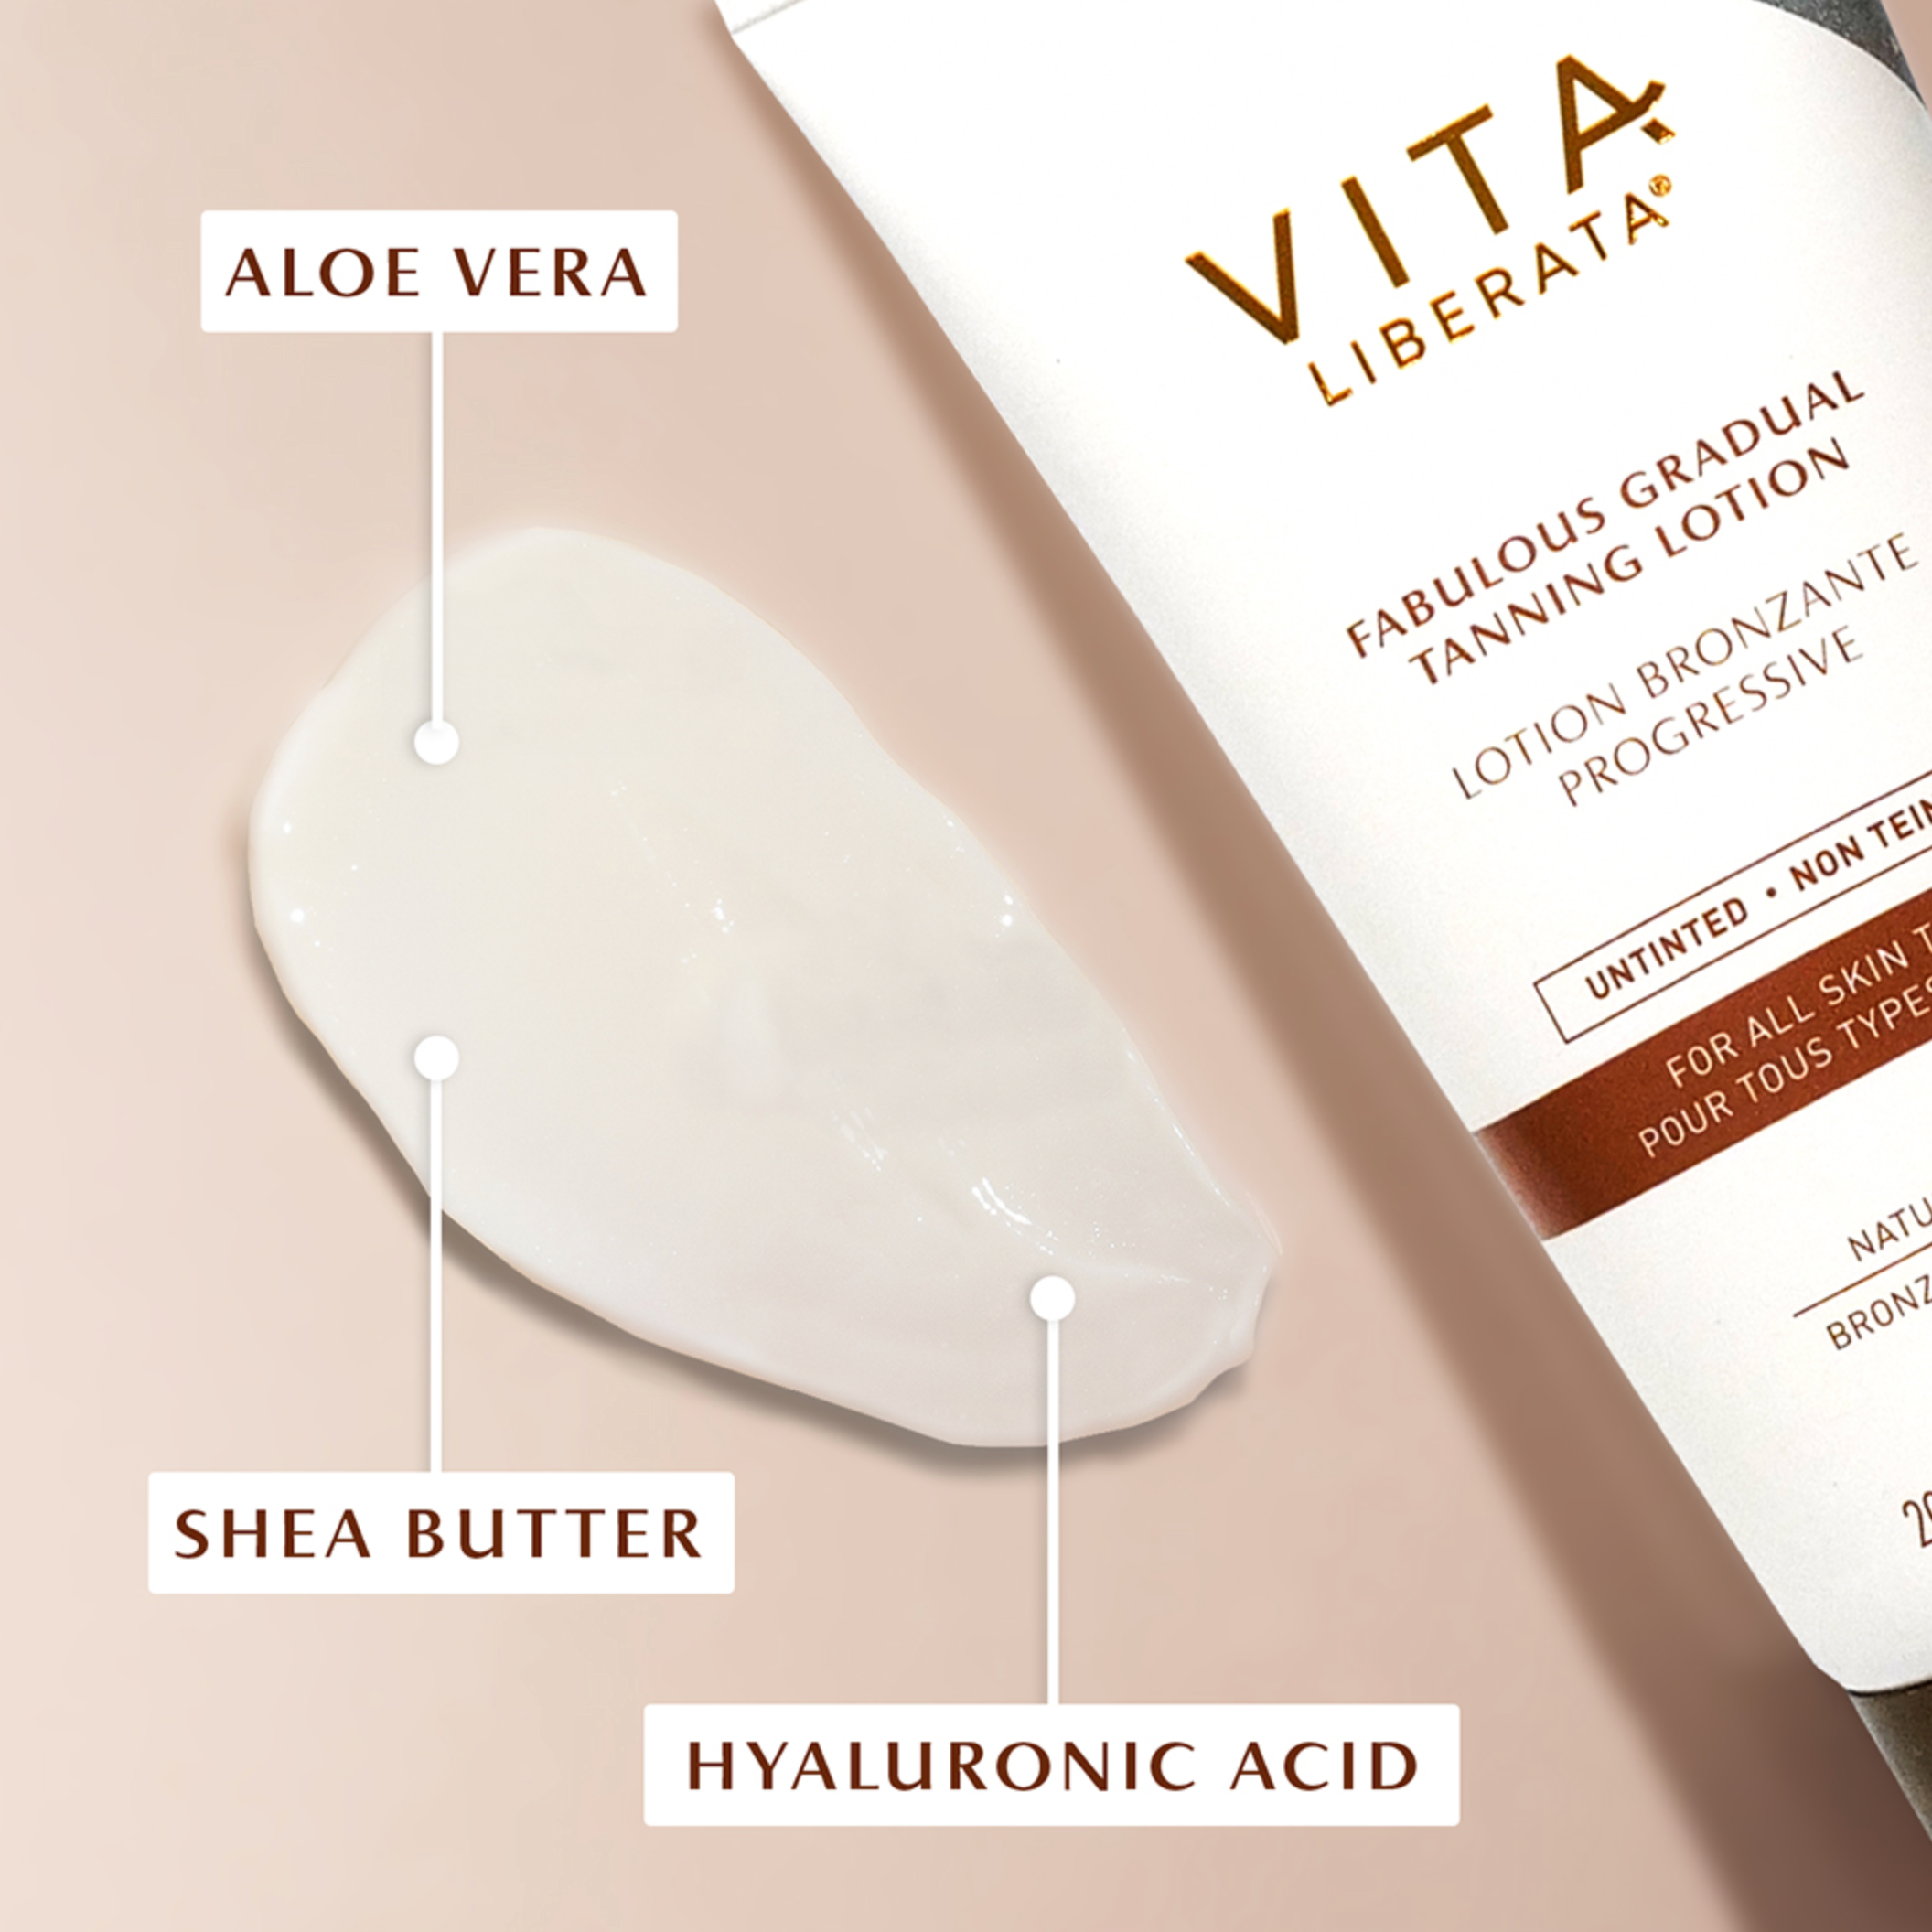 Vita Liberata Fabulous Gradual Tanning Lotion, key ingredients